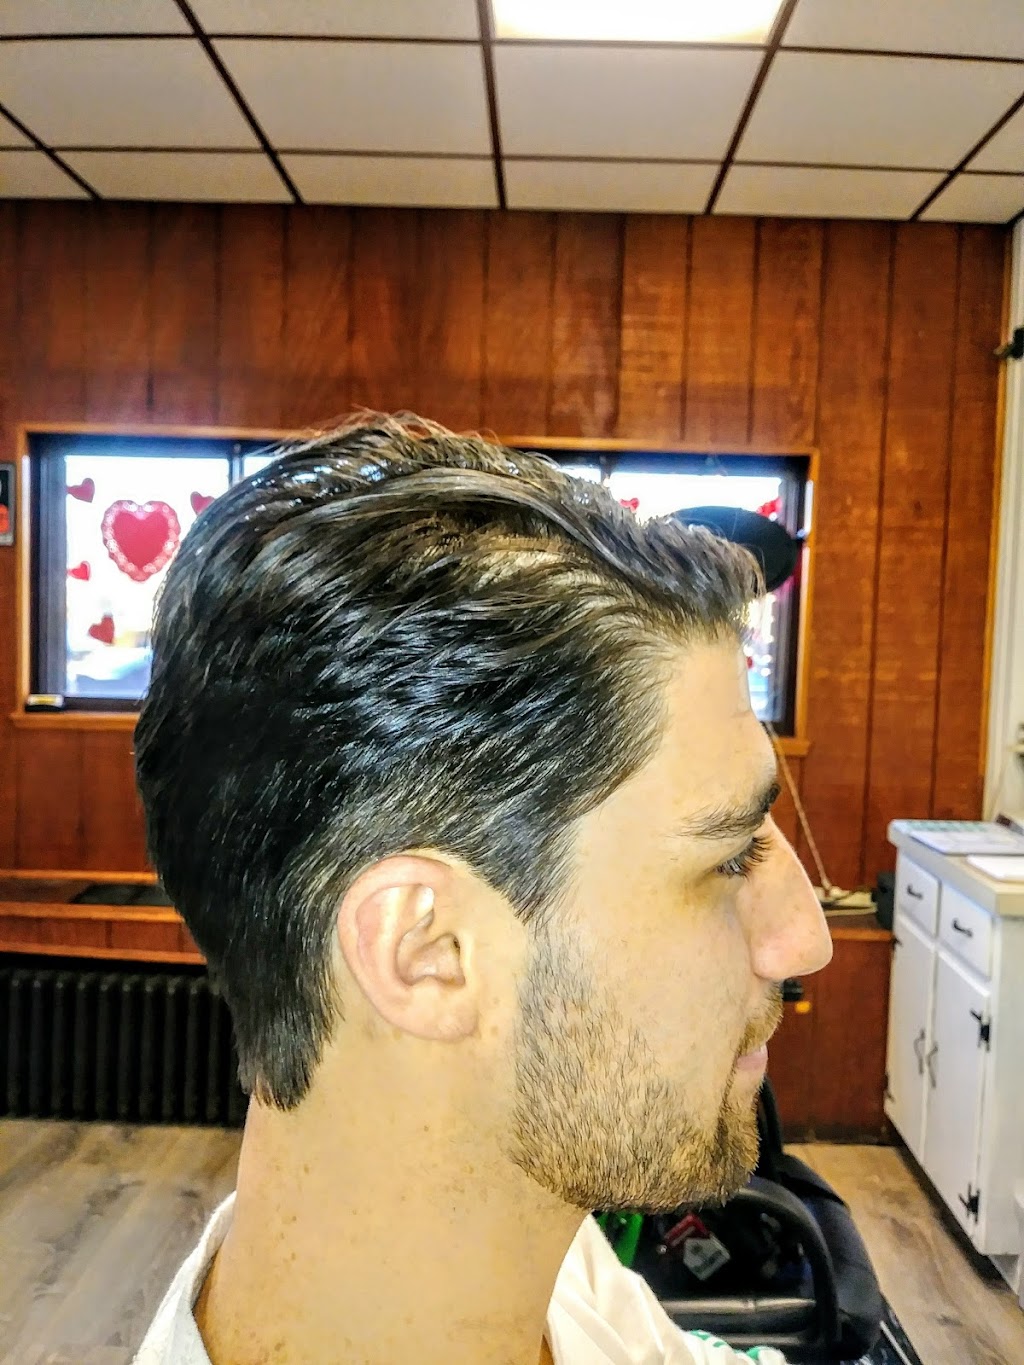 Interboro Haircuts | 6 Powhatan Ave, Essington, PA 19029 | Phone: (267) 231-0745